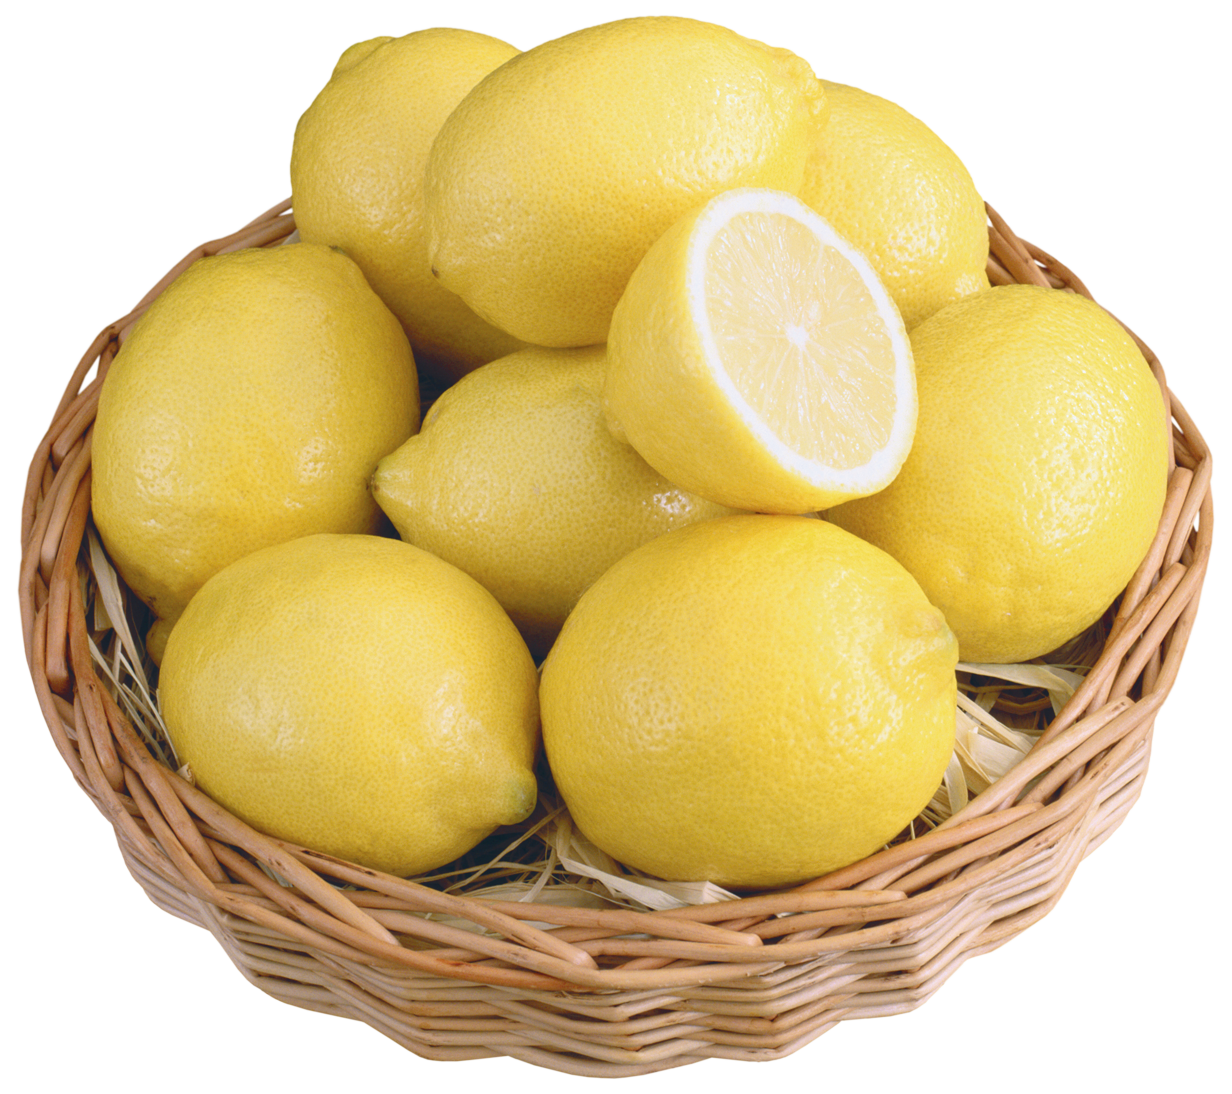 In wicker bowl png. Lemons clipart basket